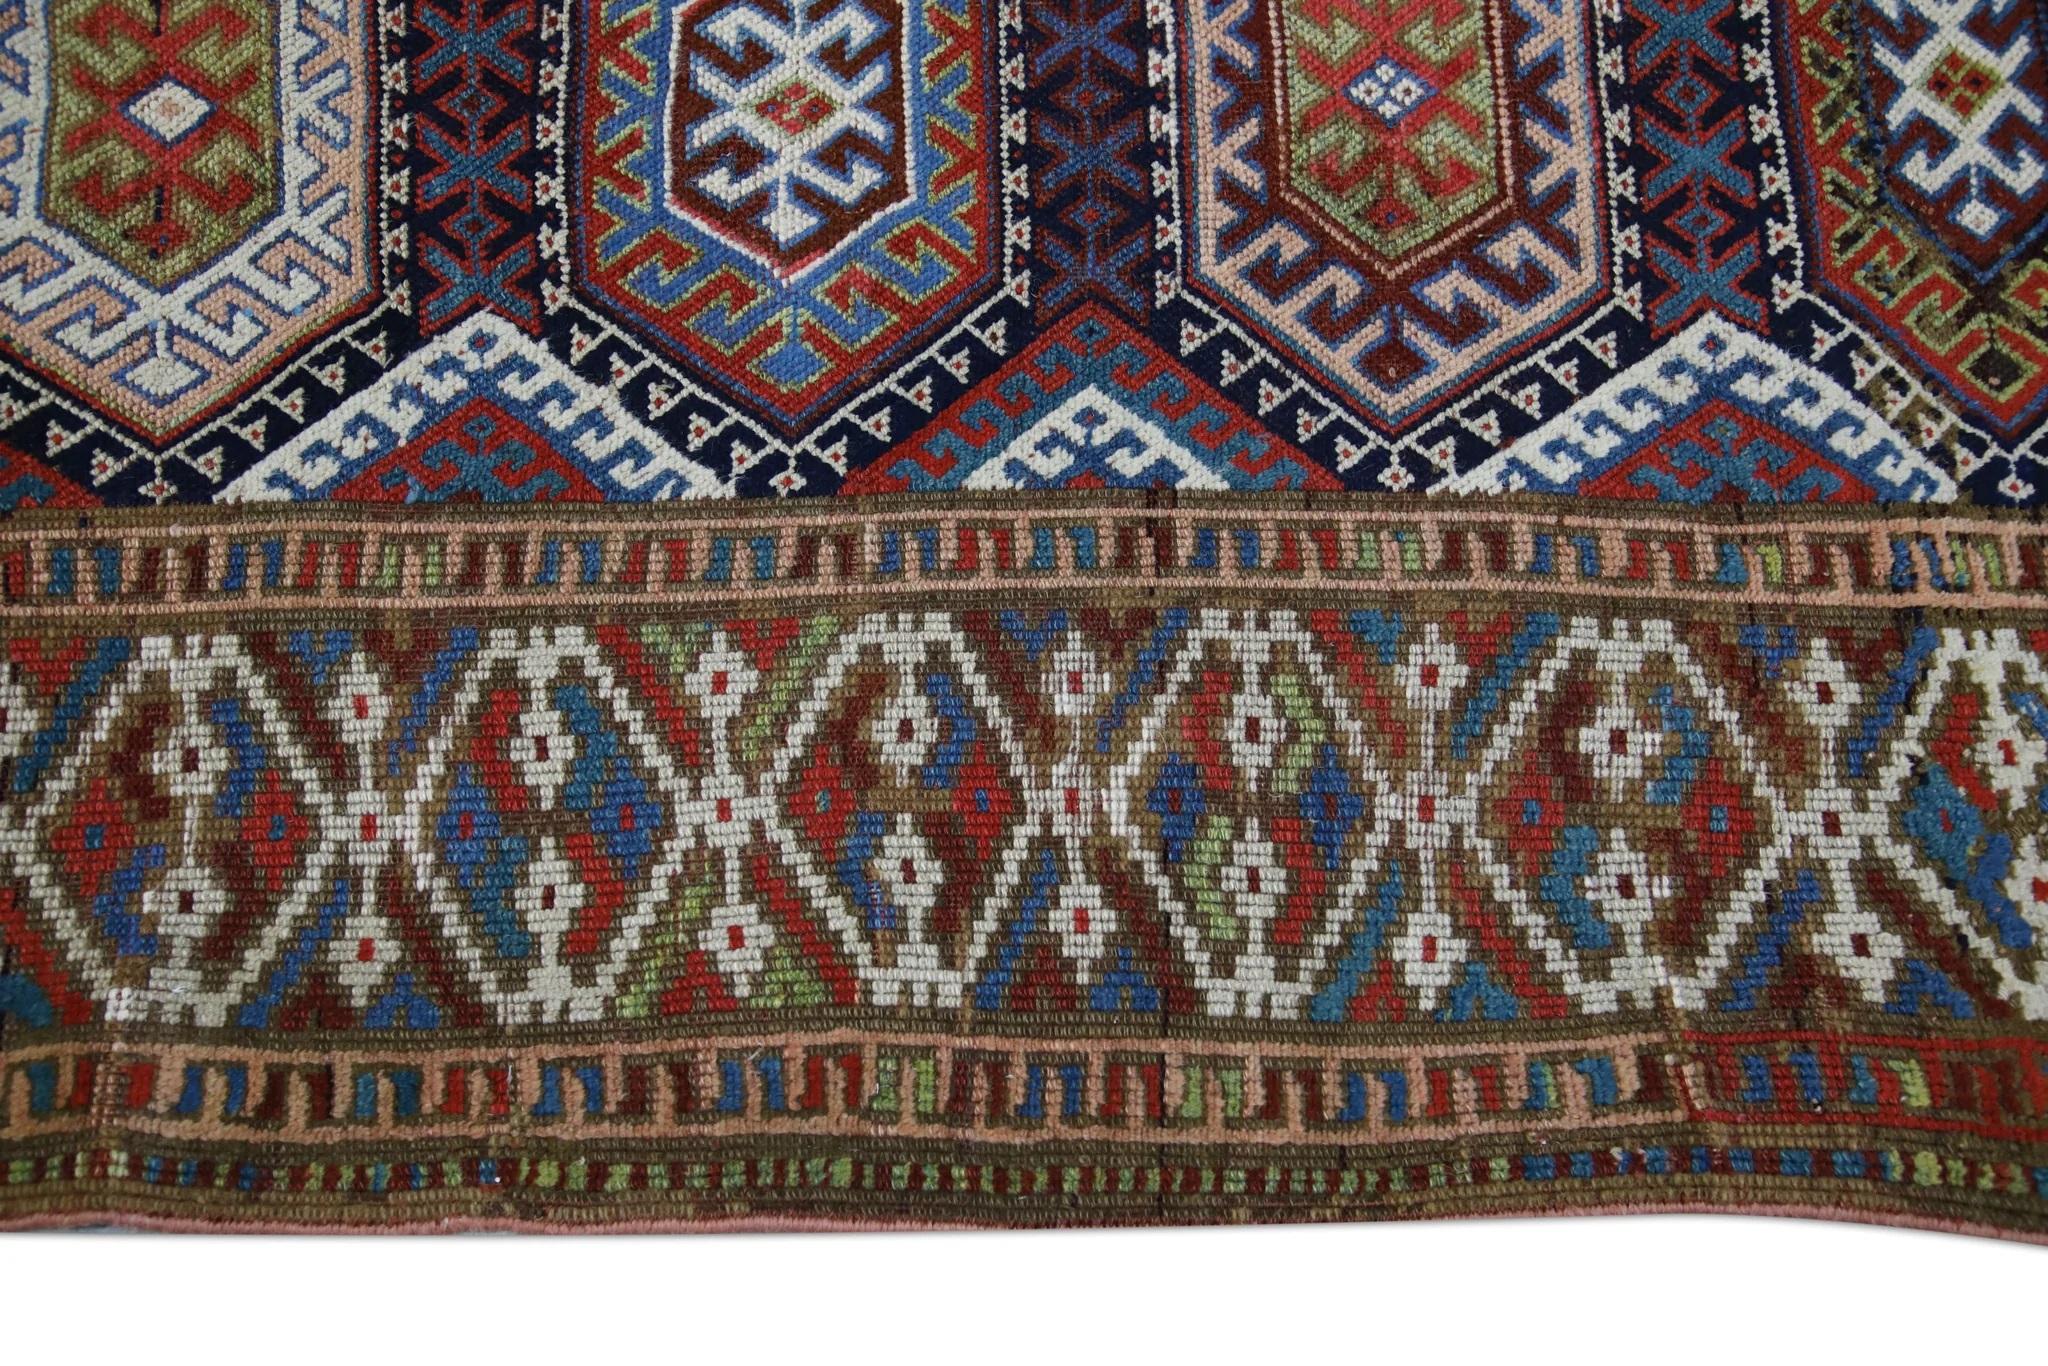 Multicolor Handwoven Wool Vintage Turkish Oushak Rug 4' x 5'8